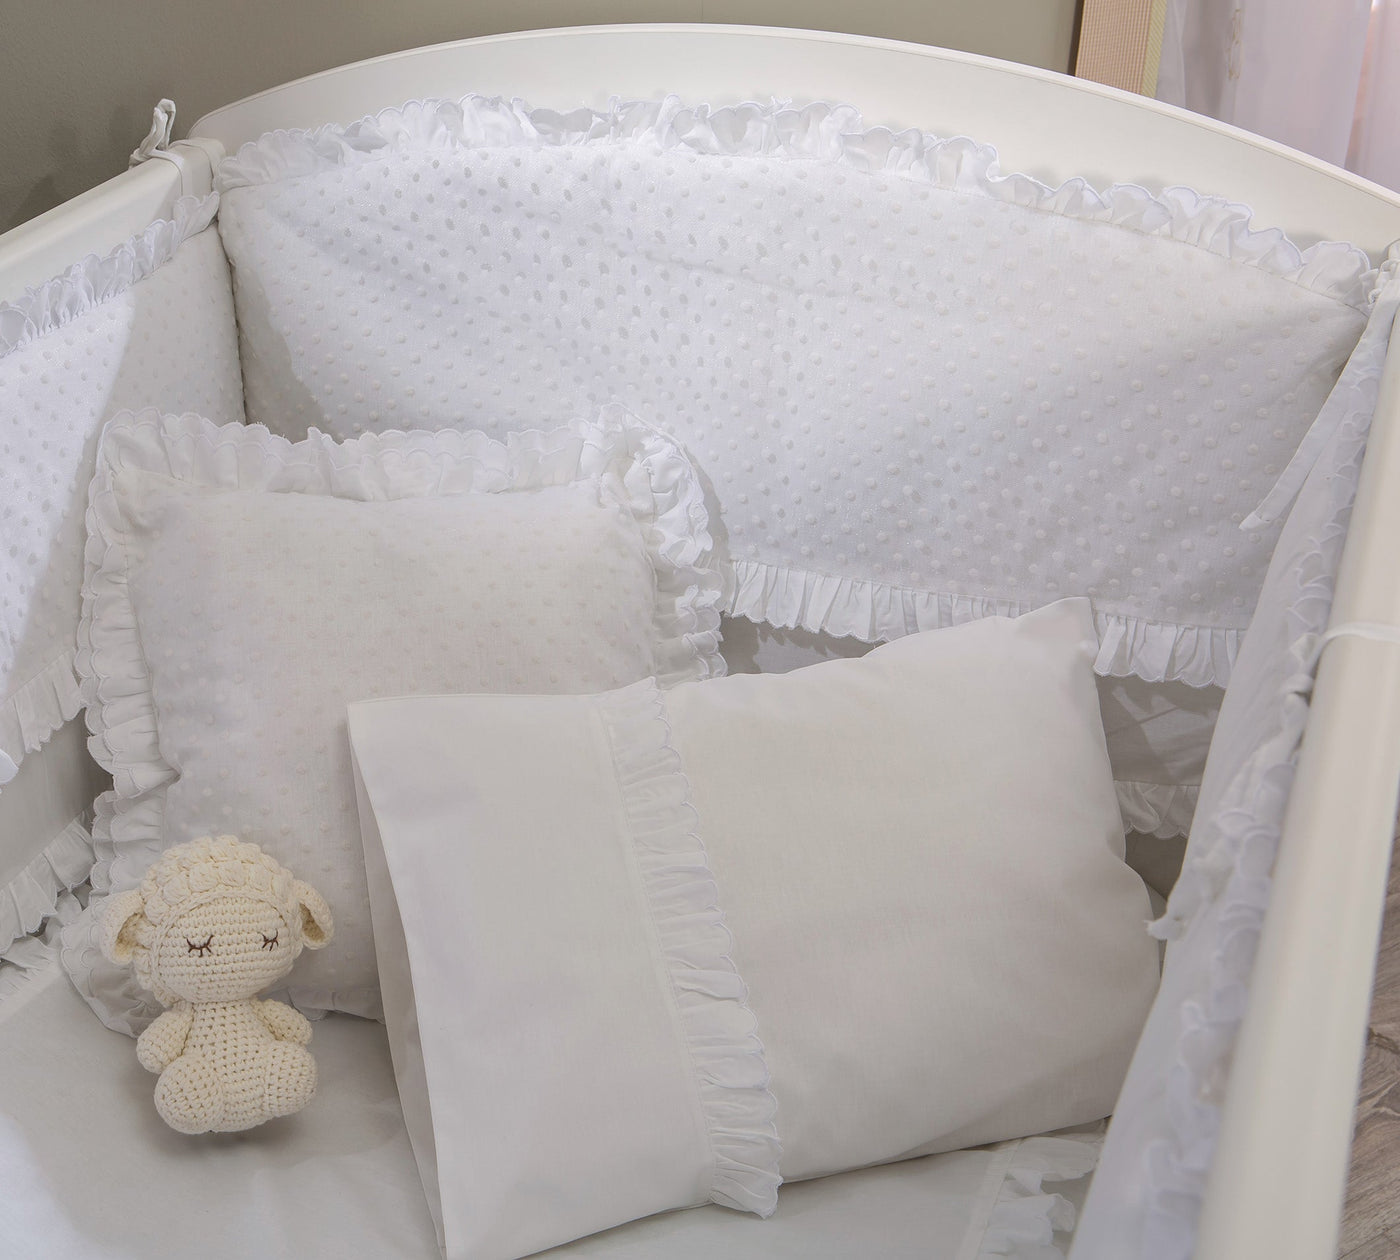 White Swinging Baby Bed (70x130 cm)